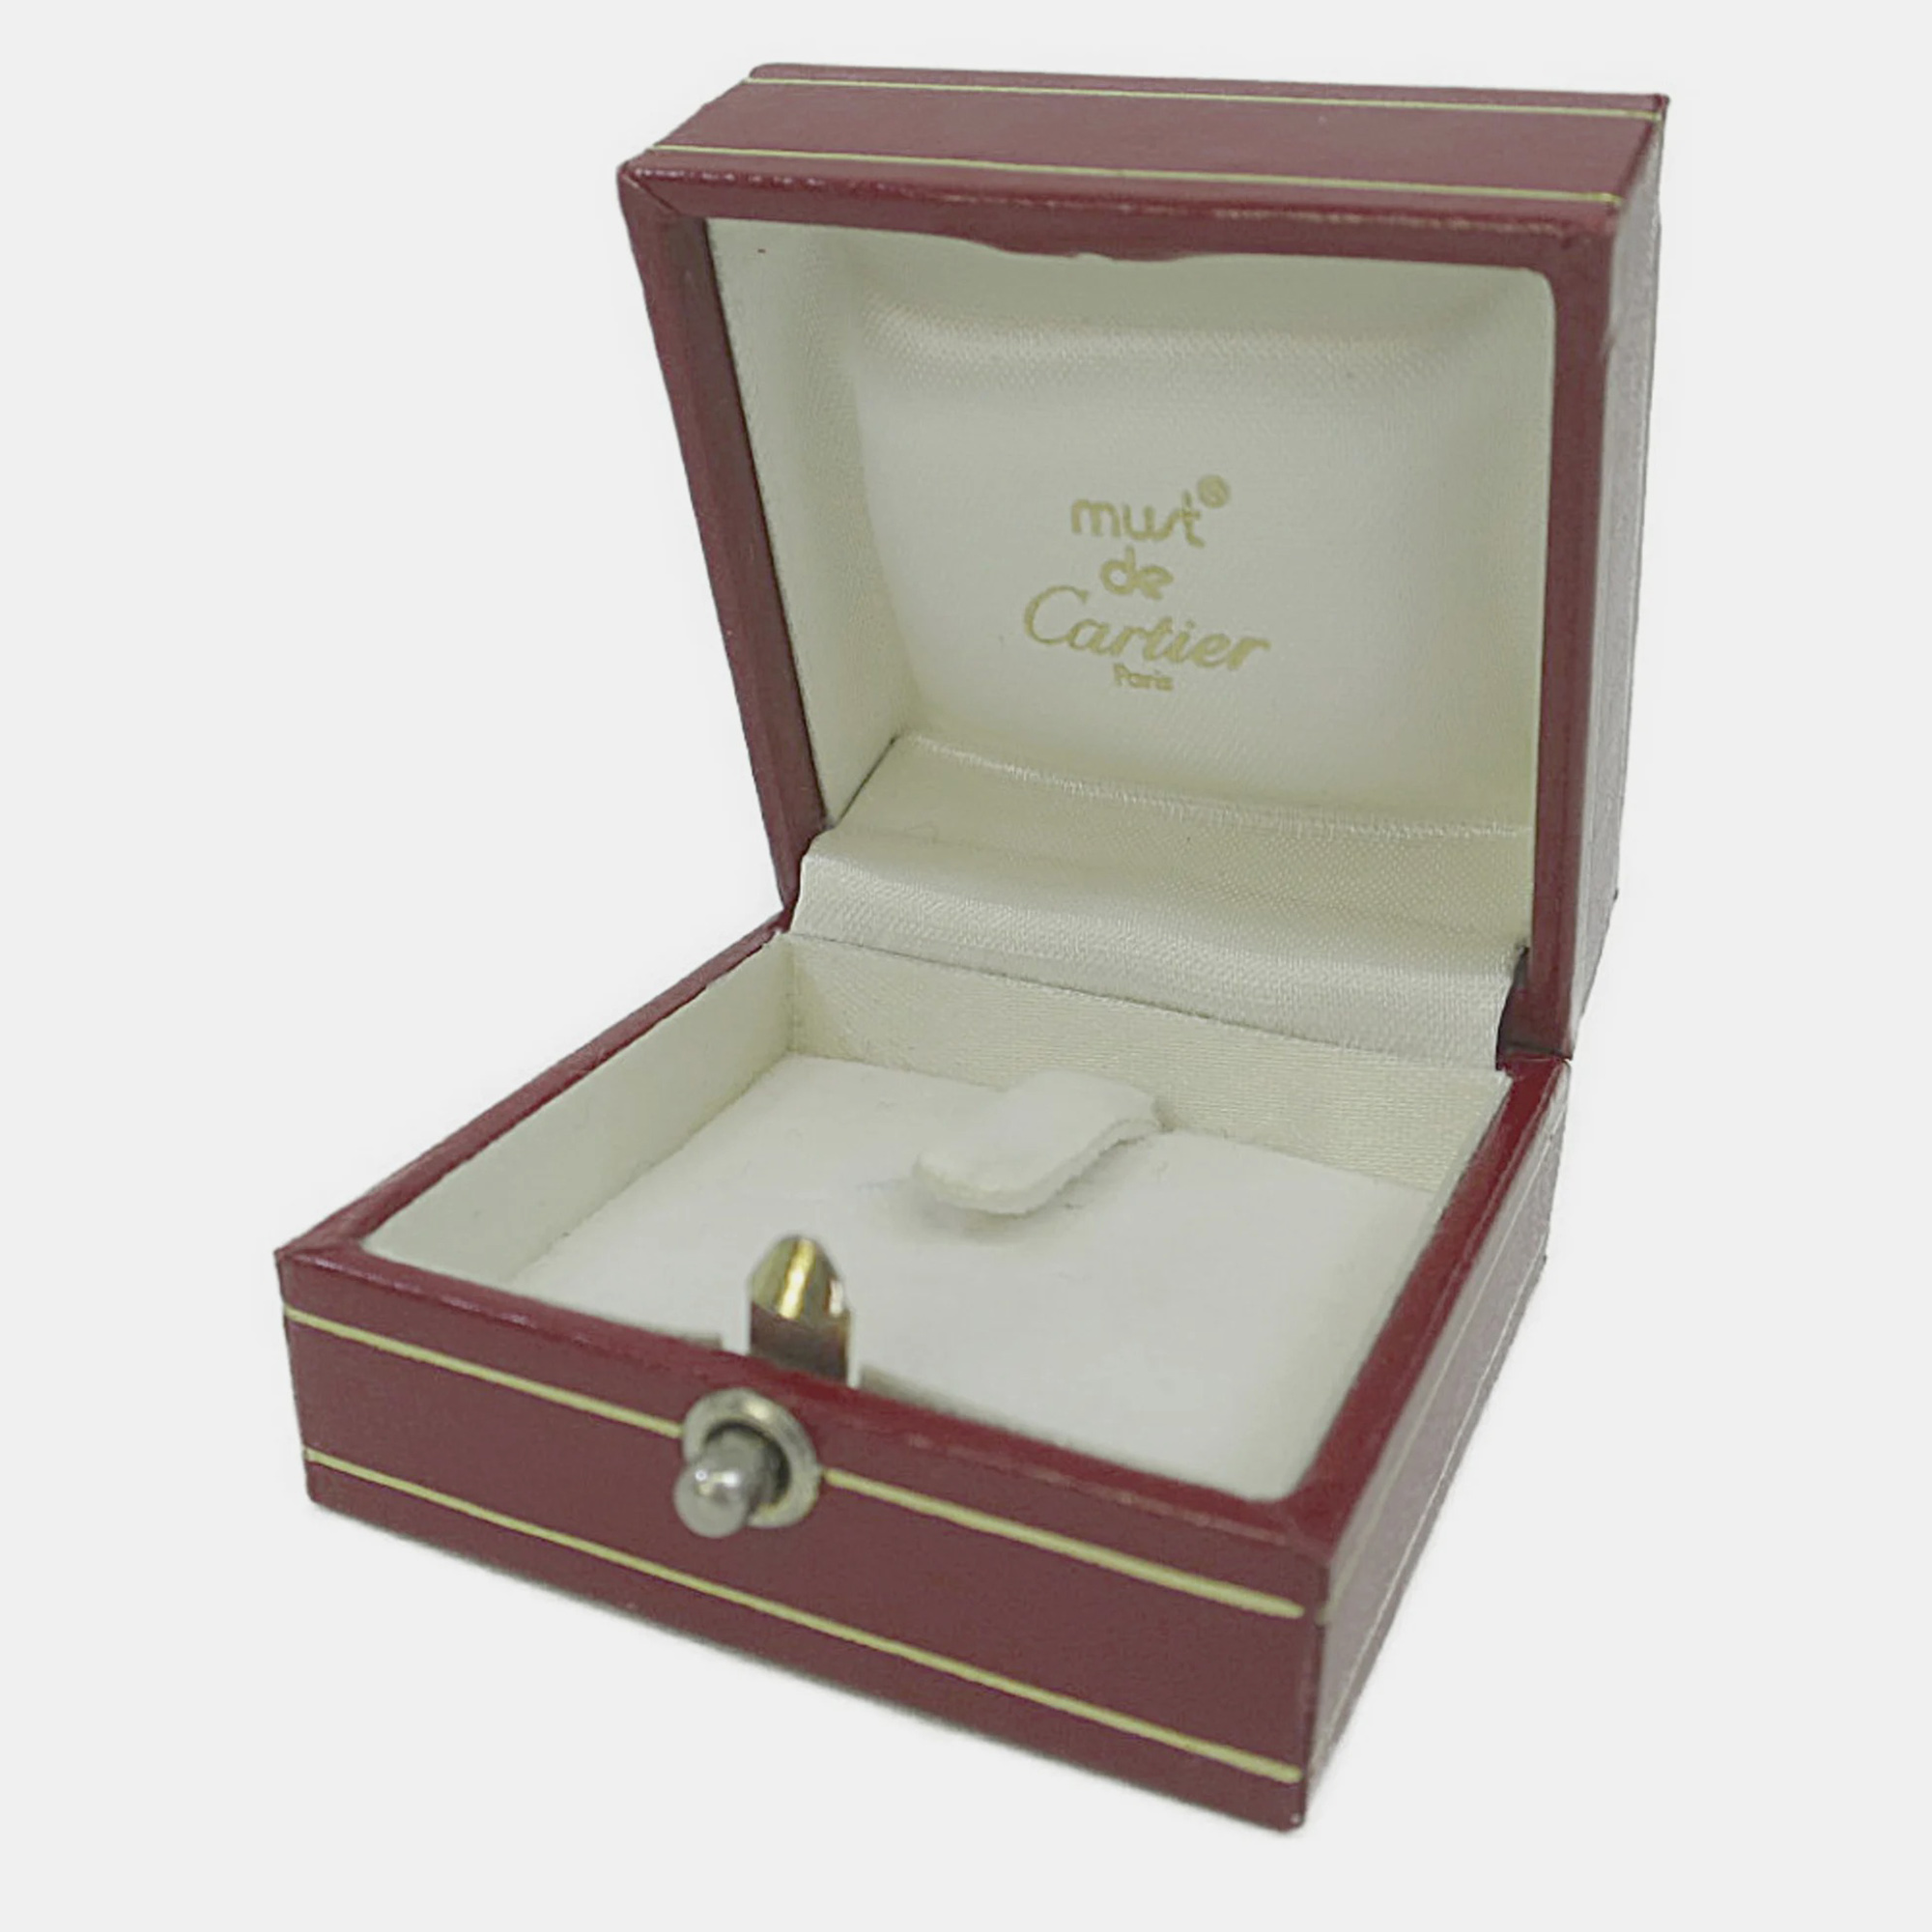 Cartier Les Must De Cartier 18K Yellow Rose And White Gold Ring EU 48